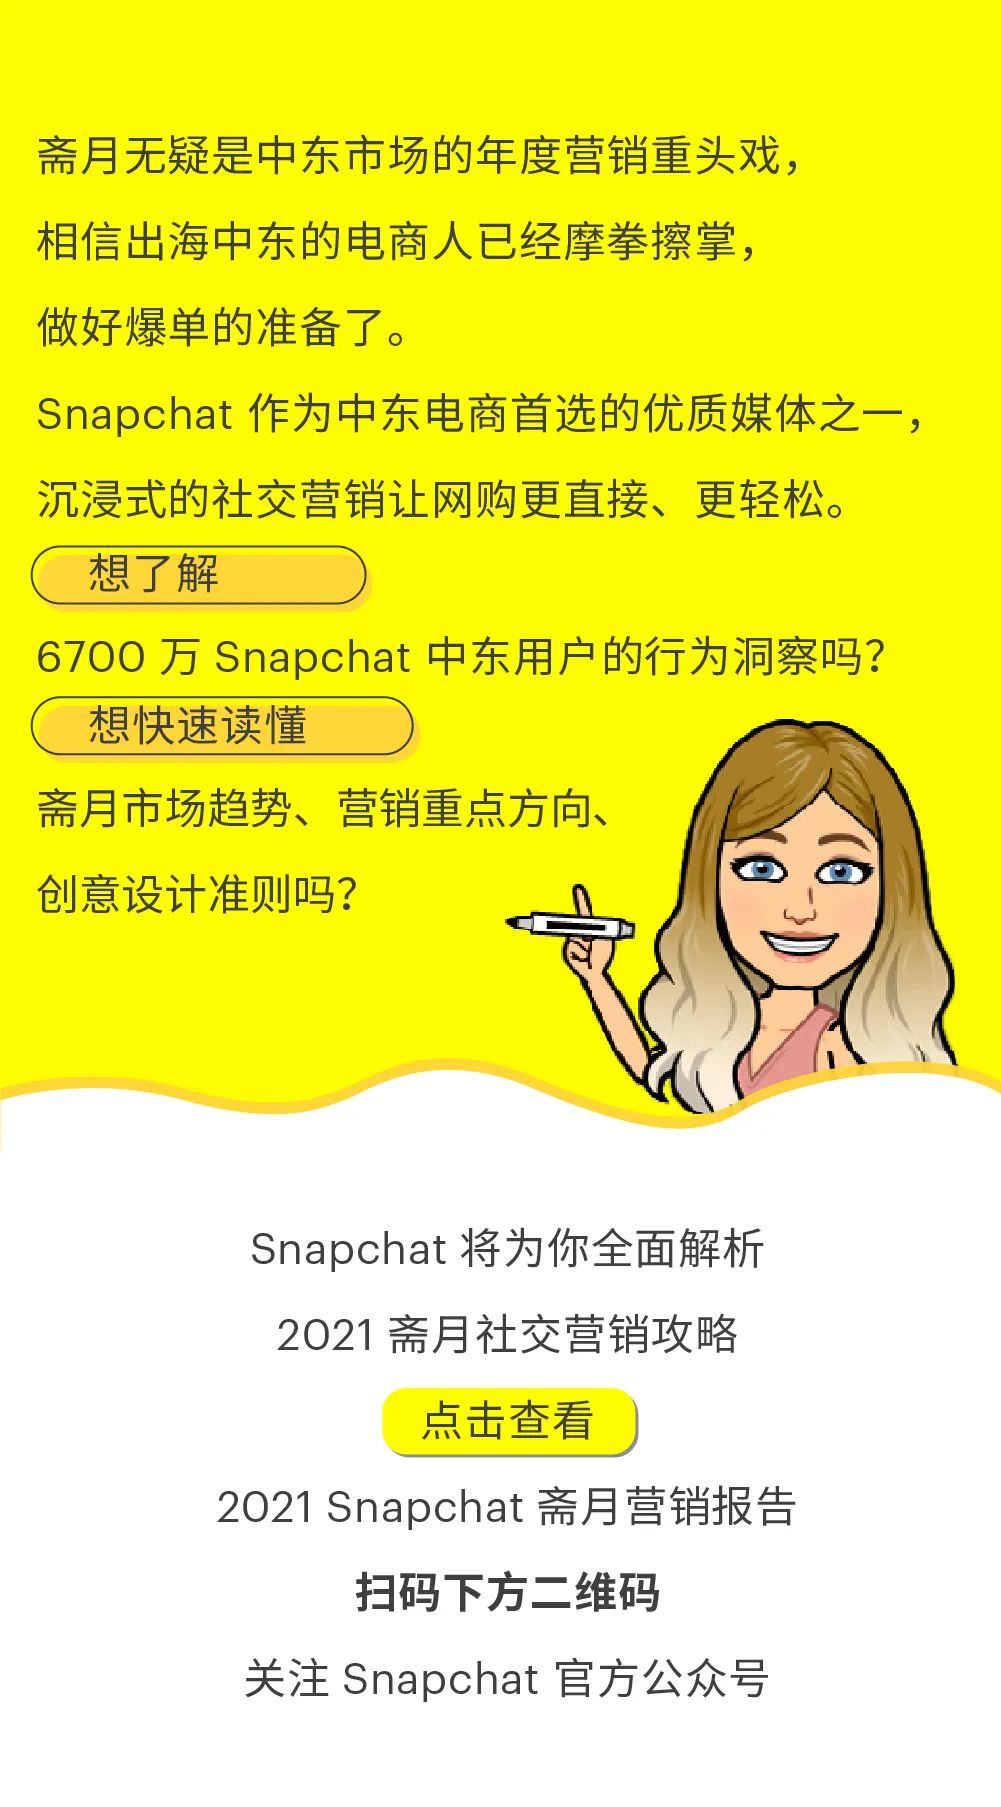 2021 Snapchat 斋月营销终极指南，手把手教你如何爆单